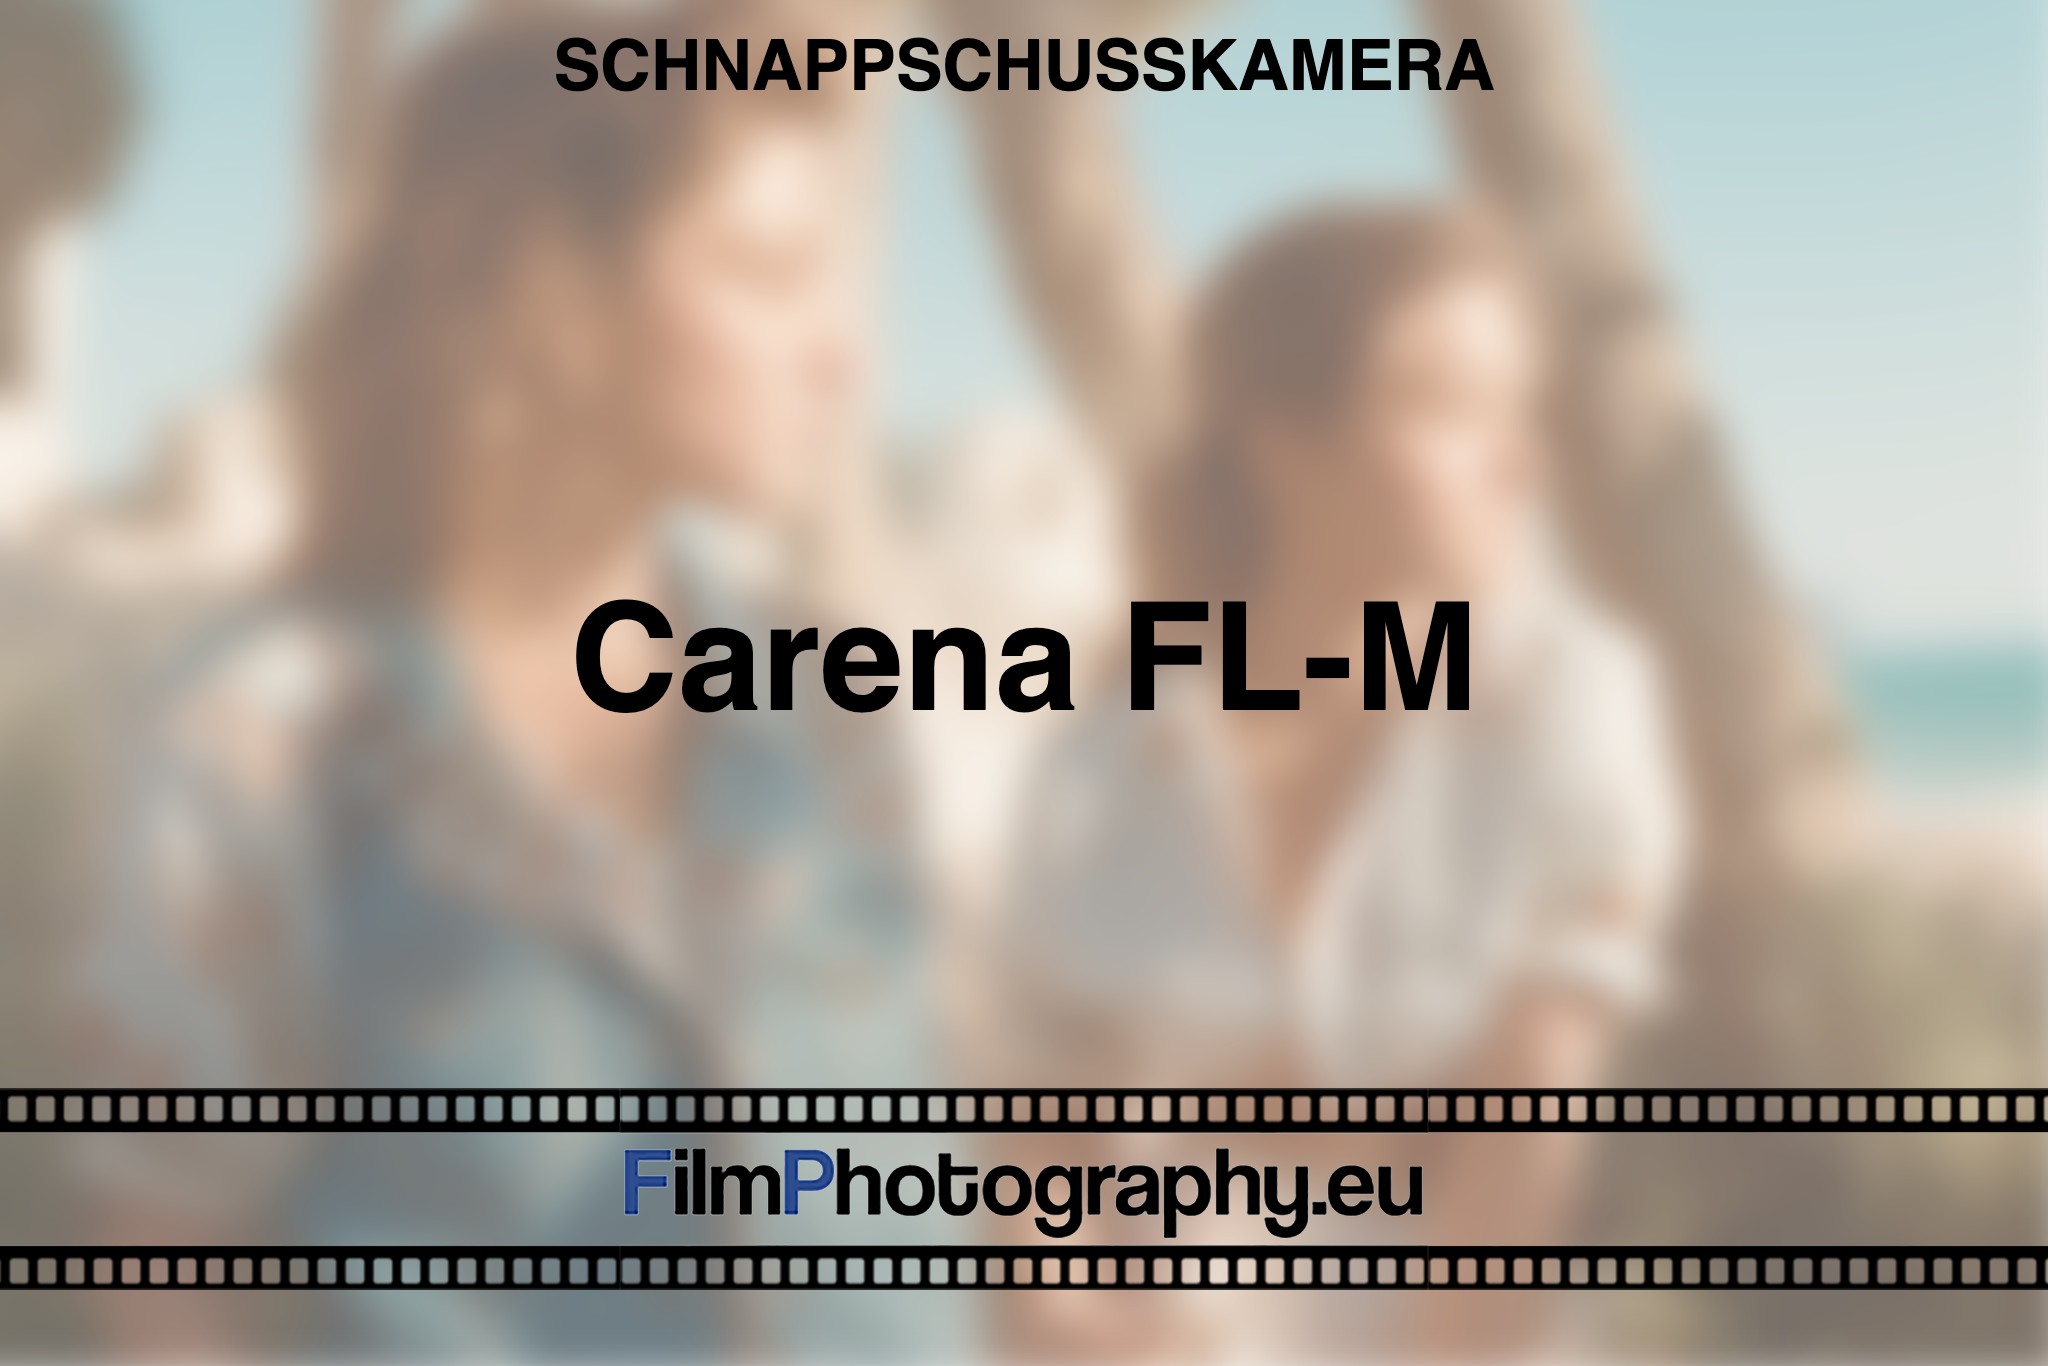 carena-fl-m-schnappschusskamera-bnv